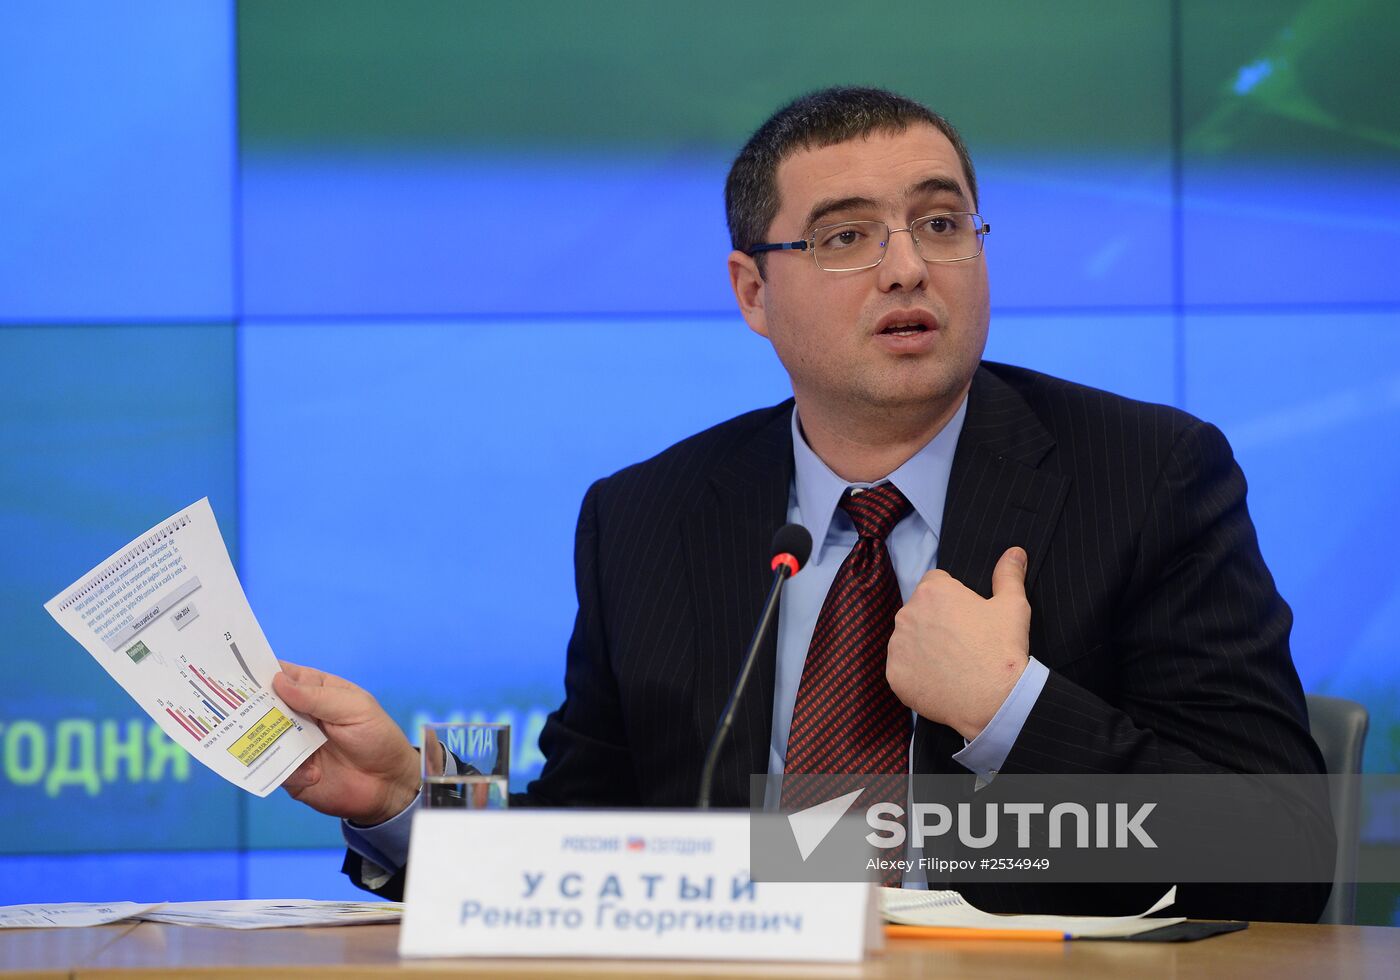 Press conference by Moldovan party "Patria" (Homeland) leader Renato Usatii